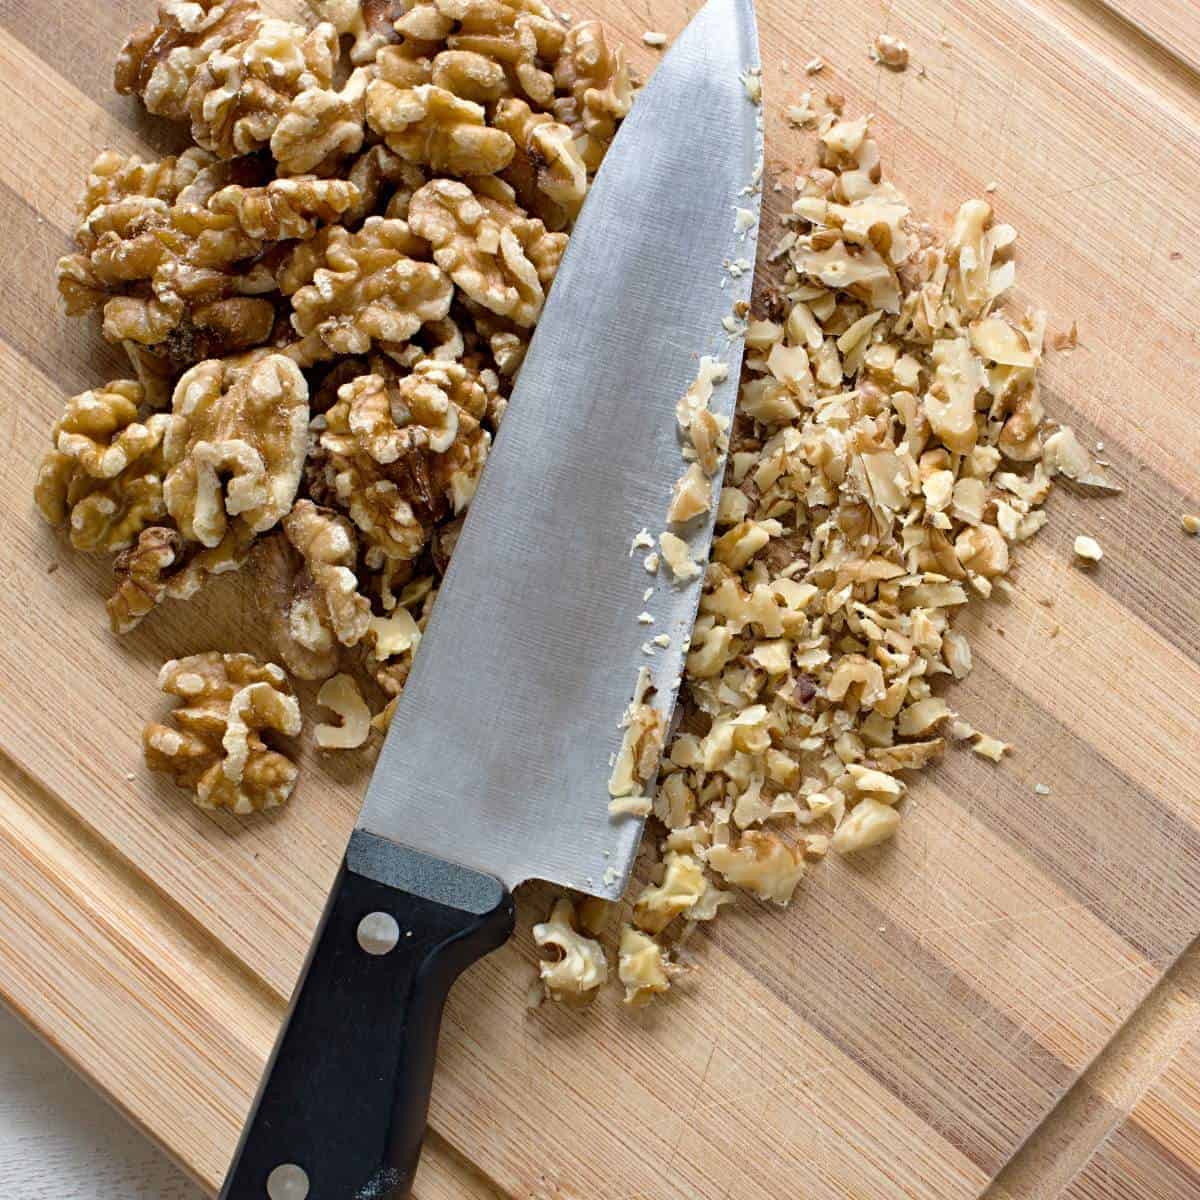 Chopping walnuts.